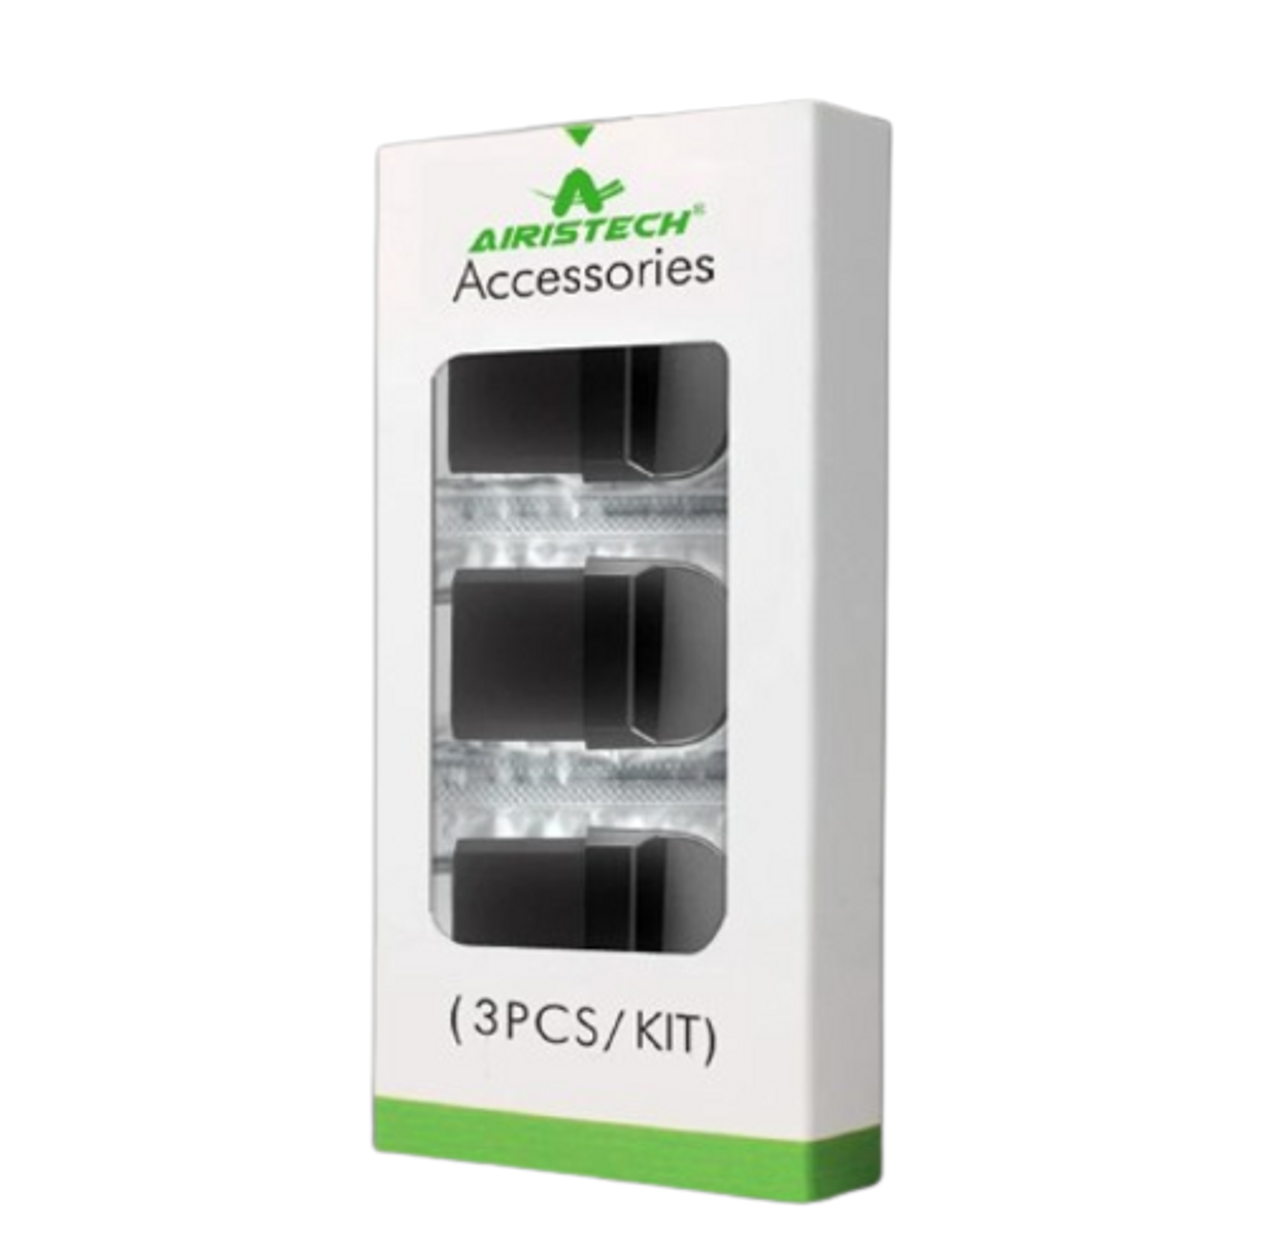 AIRISTECH Accessories Air Atomizer 3Pcs /Kit